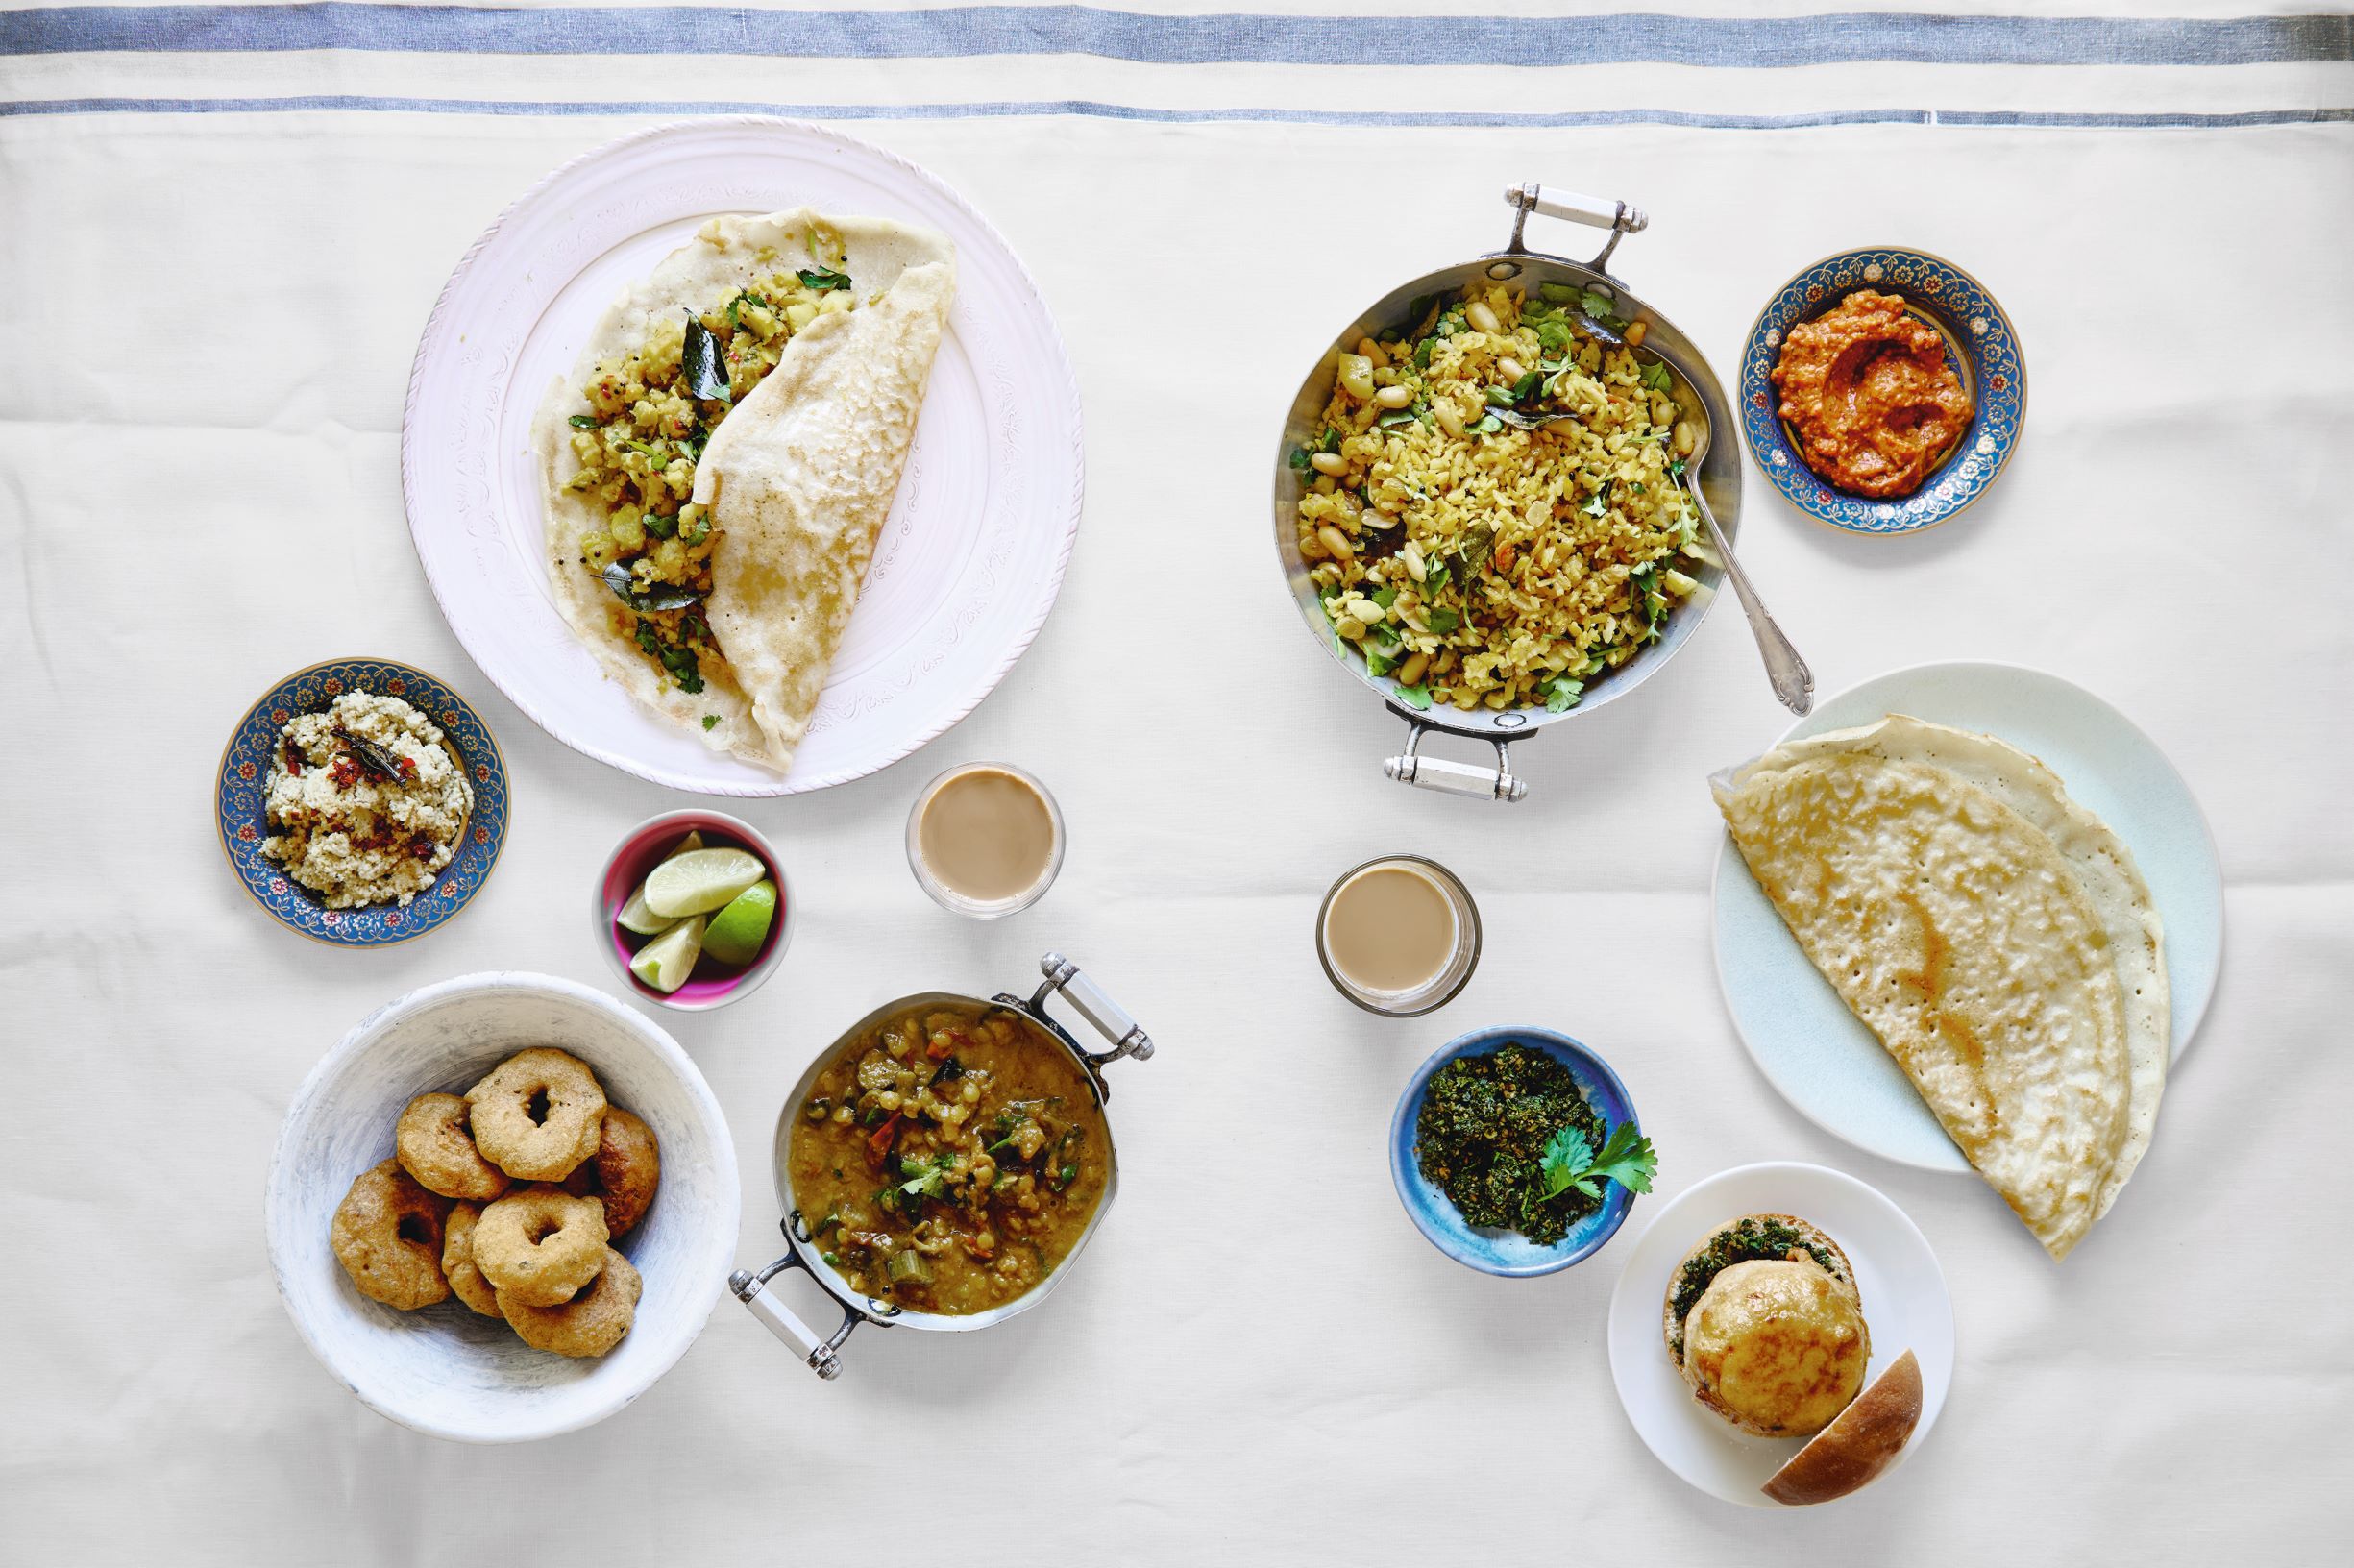 Clockwise from top left: dosa with aloo masala; flattened rice porridge; tomato chutney; chai karak; dosa; fried potato sandwich; coriander chutney; sambar; spiced lentil fritter; coconut chutney; from the Indian pages of Breakfast: The Cookbook